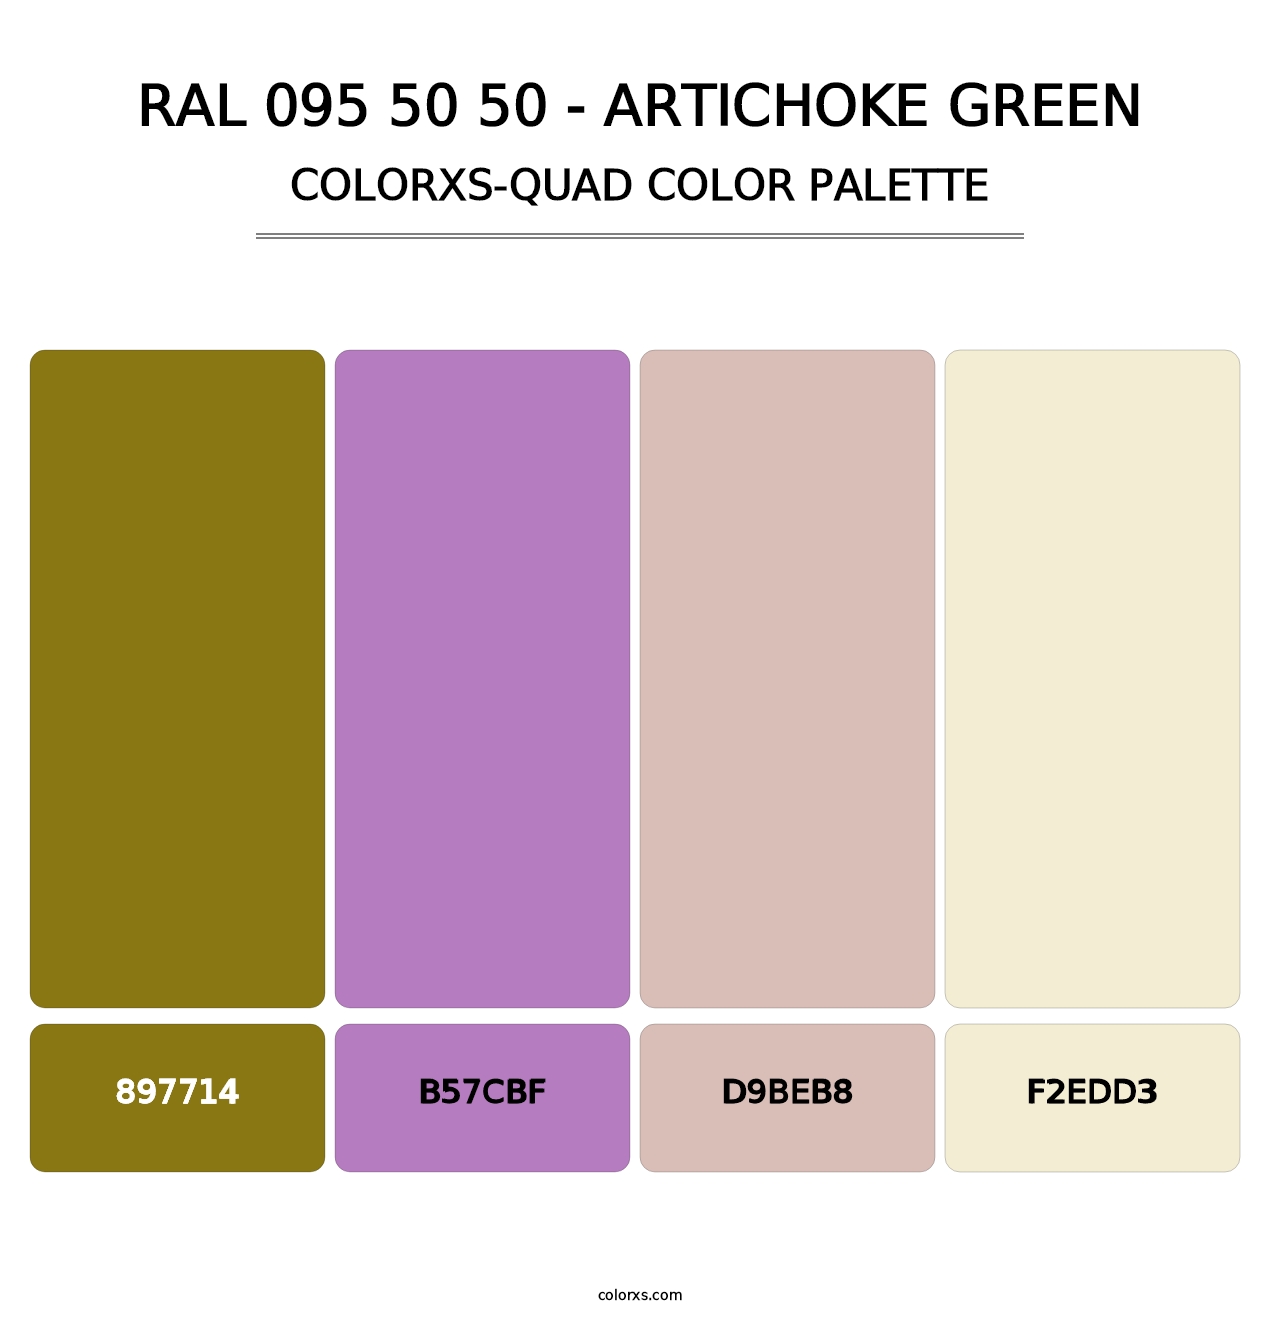 RAL 095 50 50 - Artichoke Green - Colorxs Quad Palette